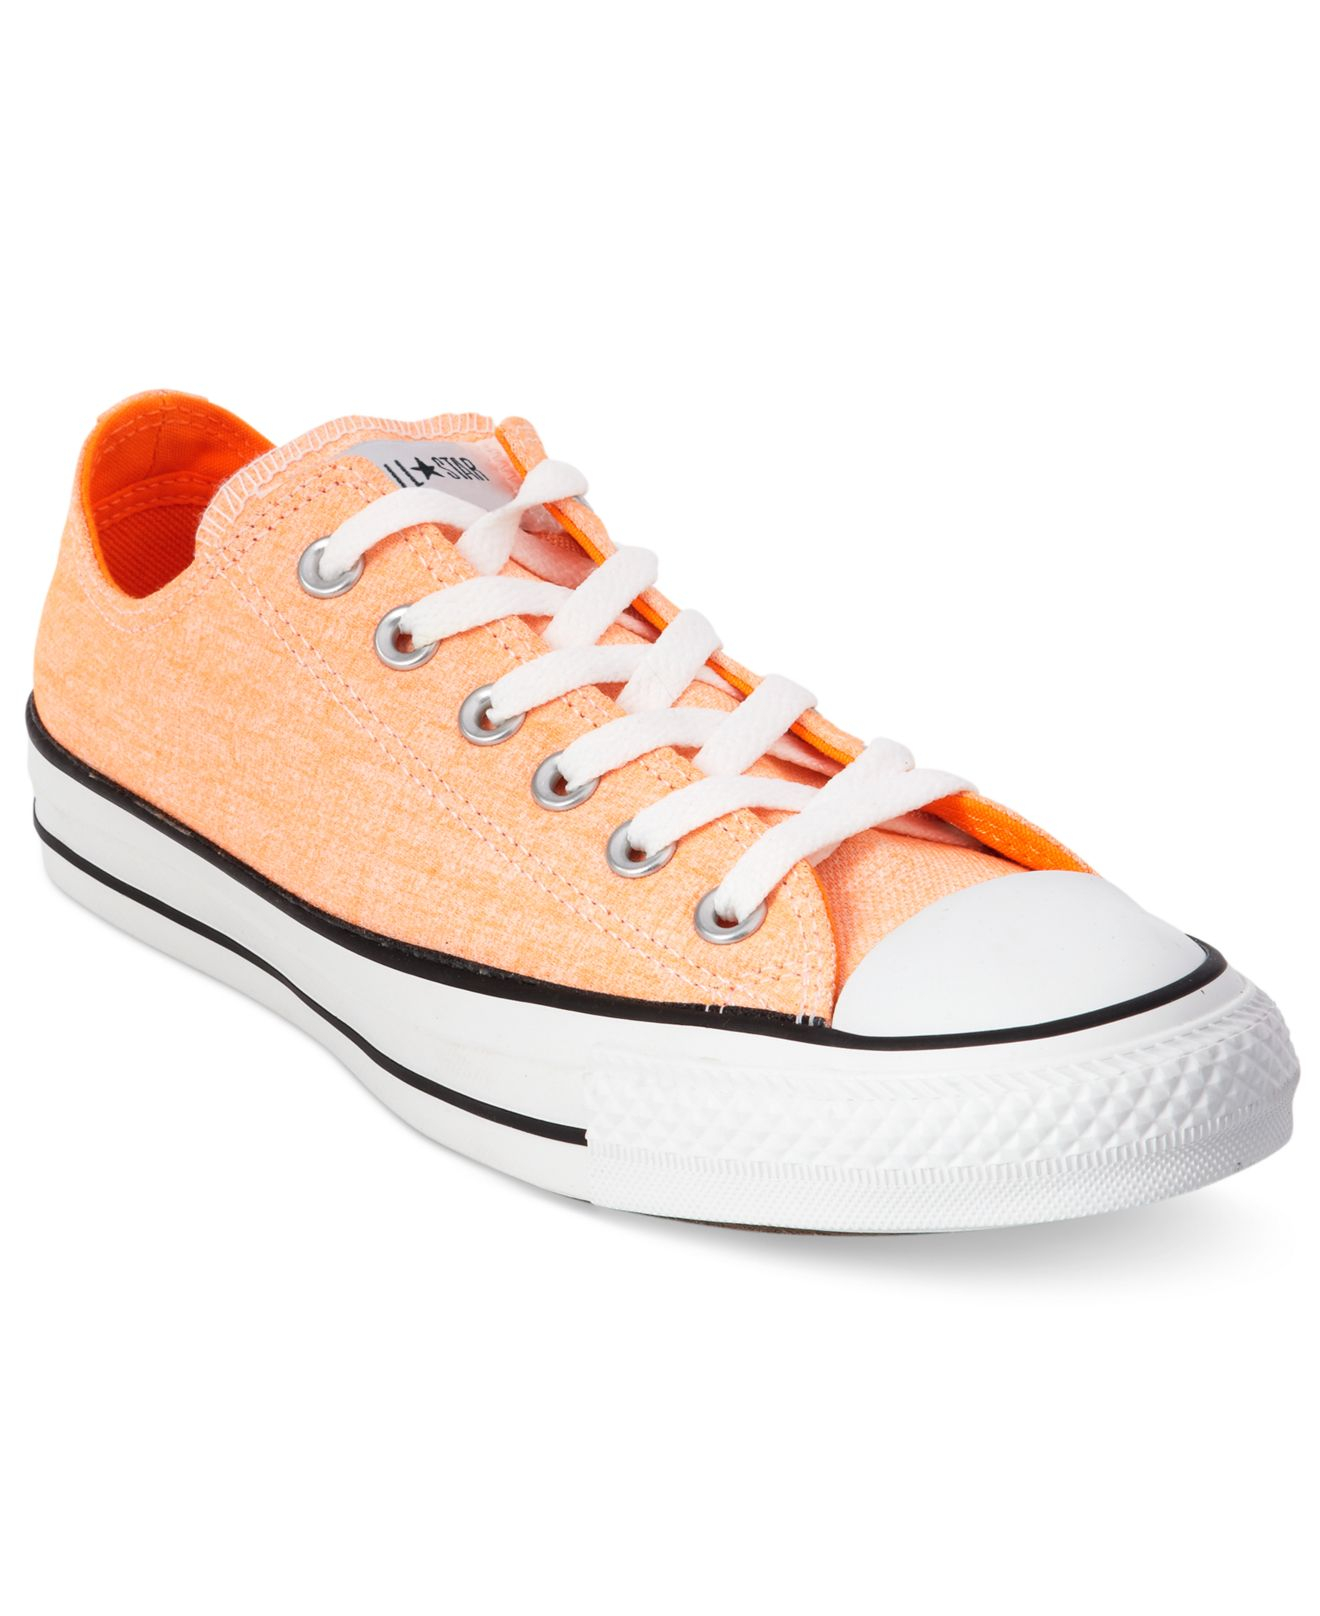 converse neon orange sneakers